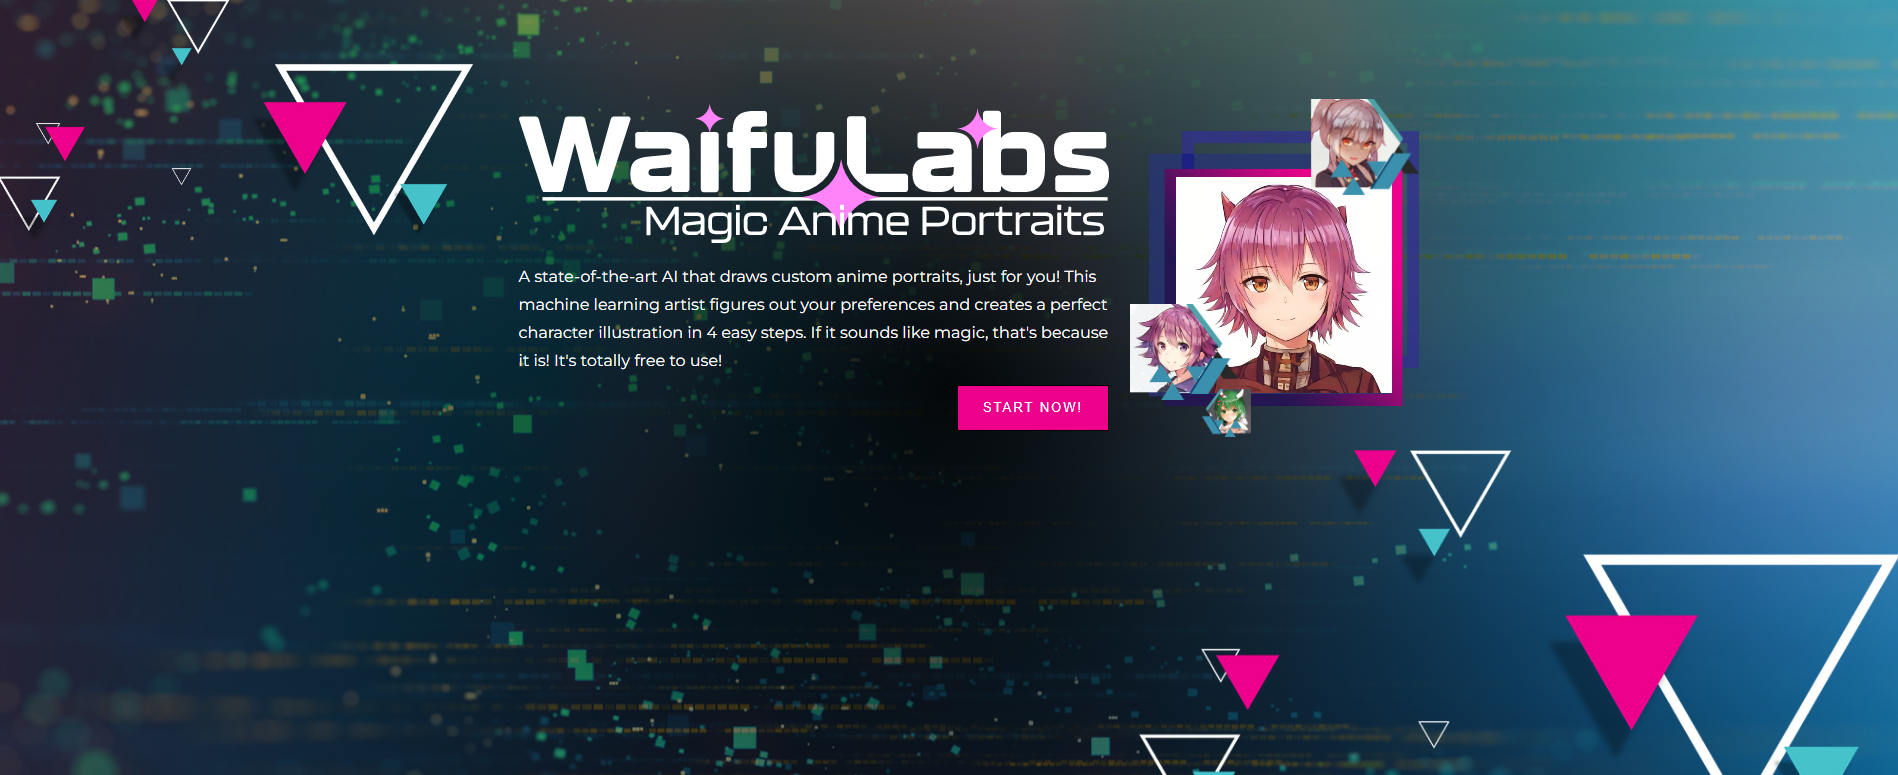 waifu labs' homepage to generate anime characters